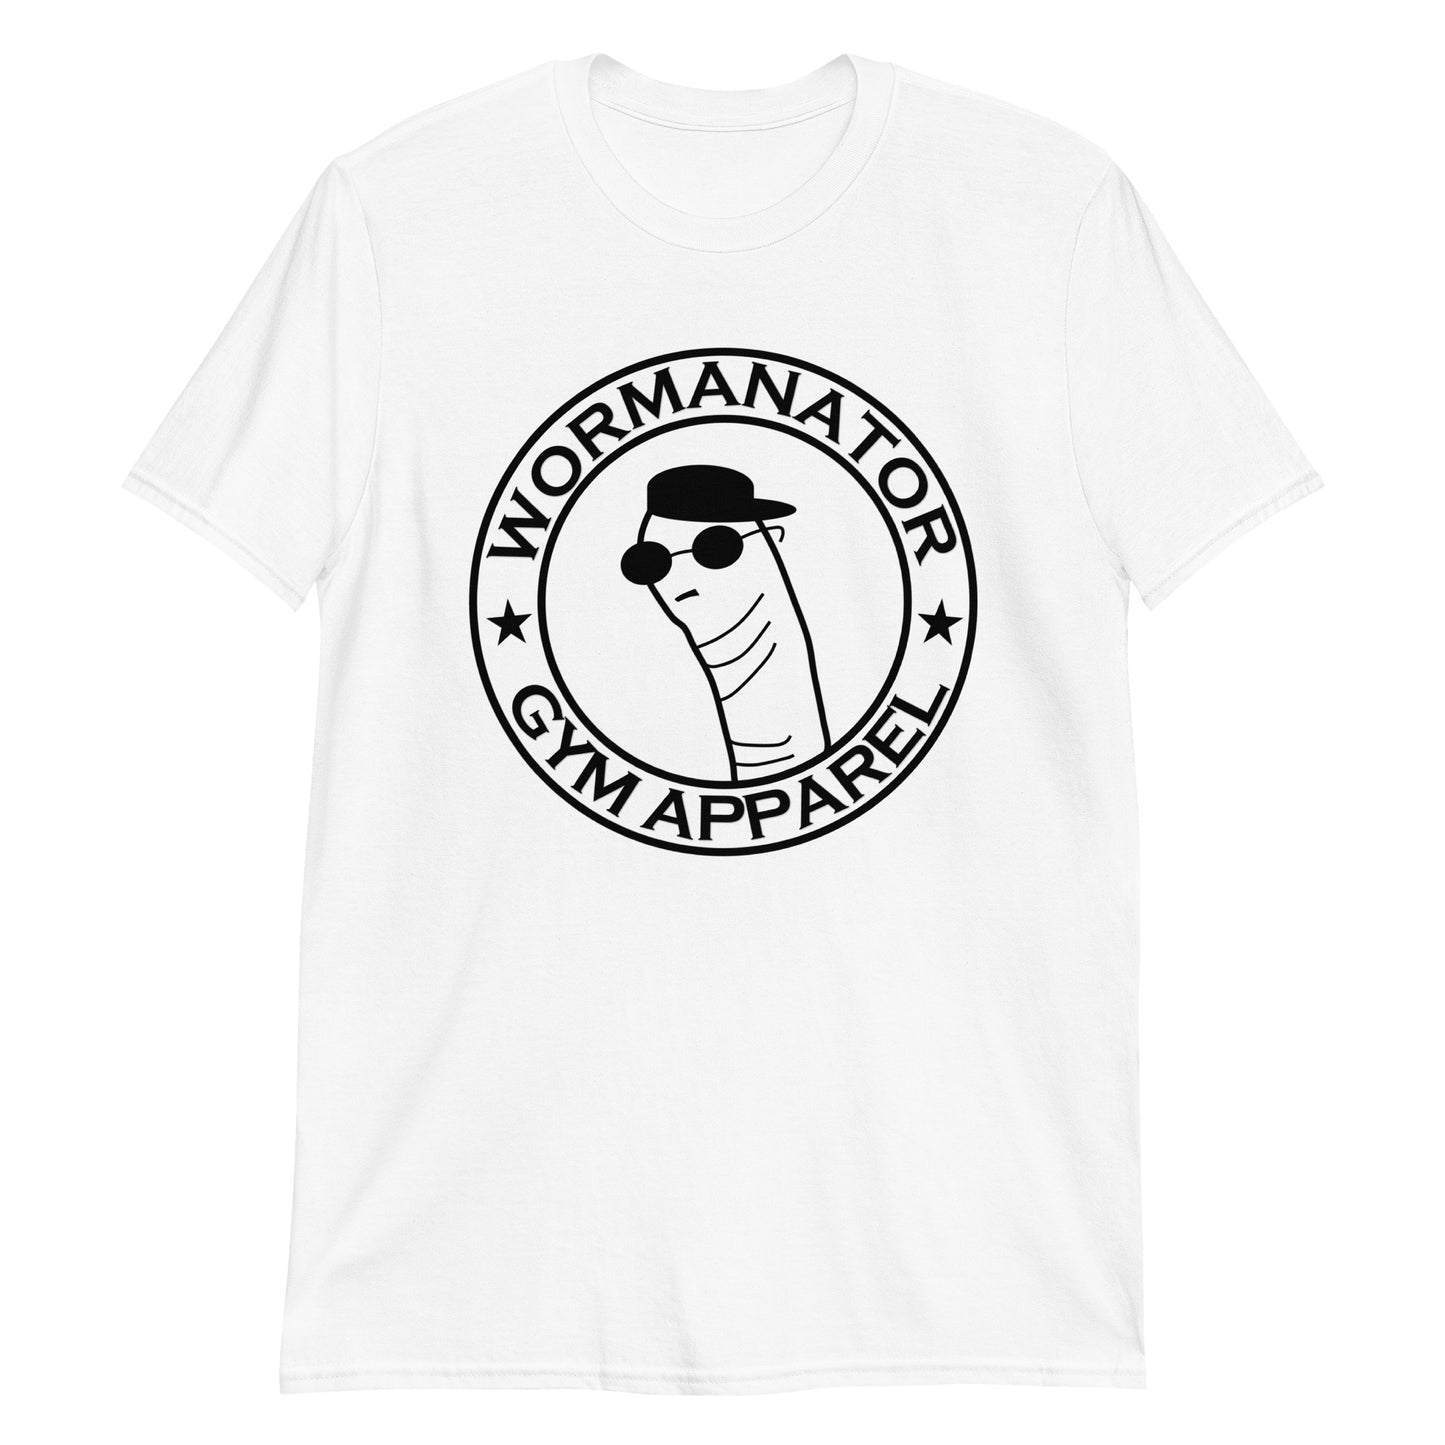 Wormanator Gym Apparel "Worm Logo" Shirt in White